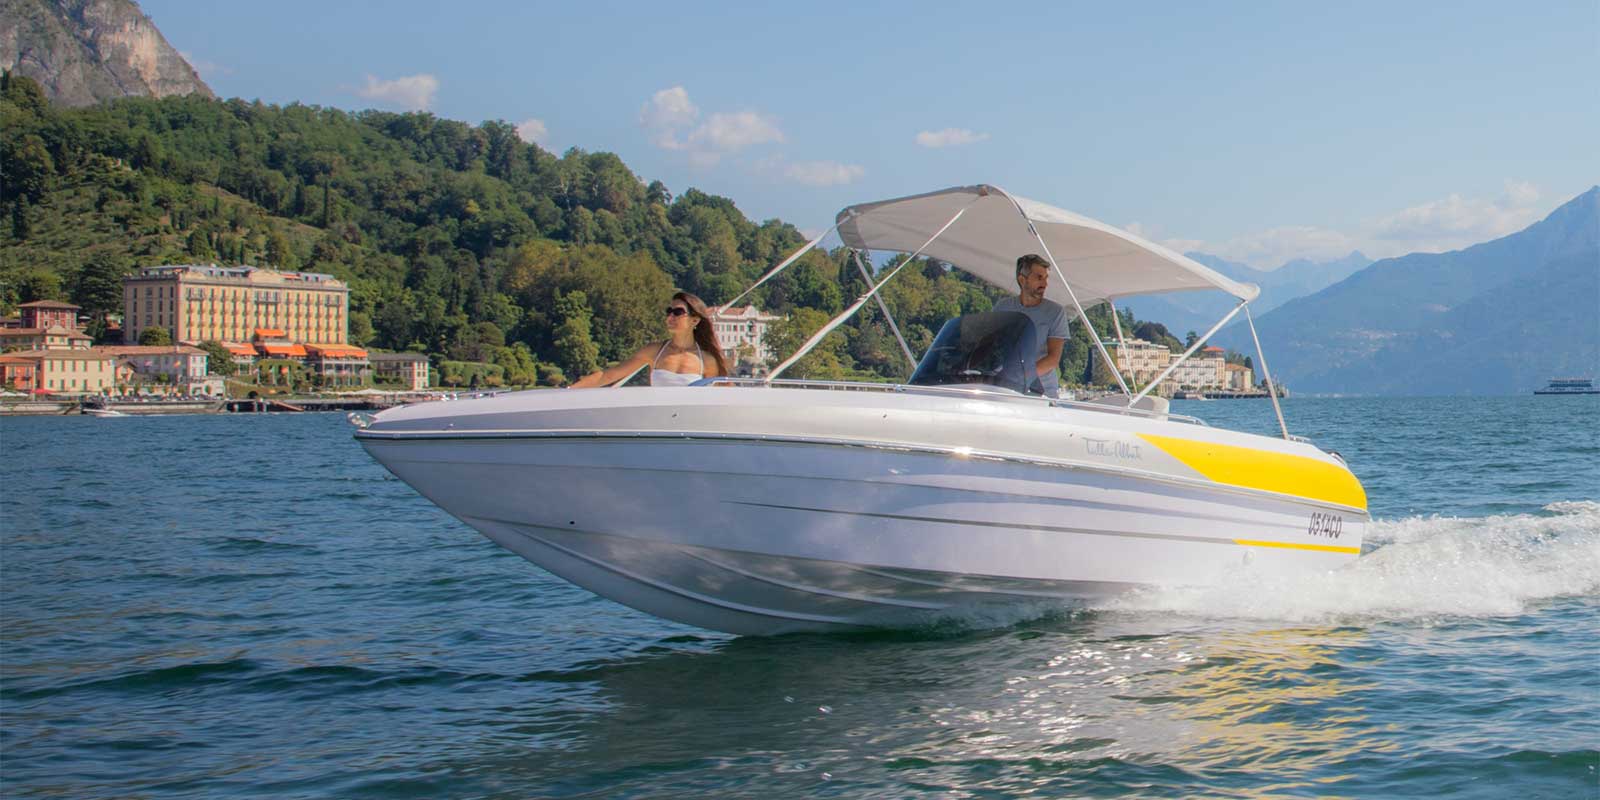 Slide - Lake Como rent Boat - Cadenazzi